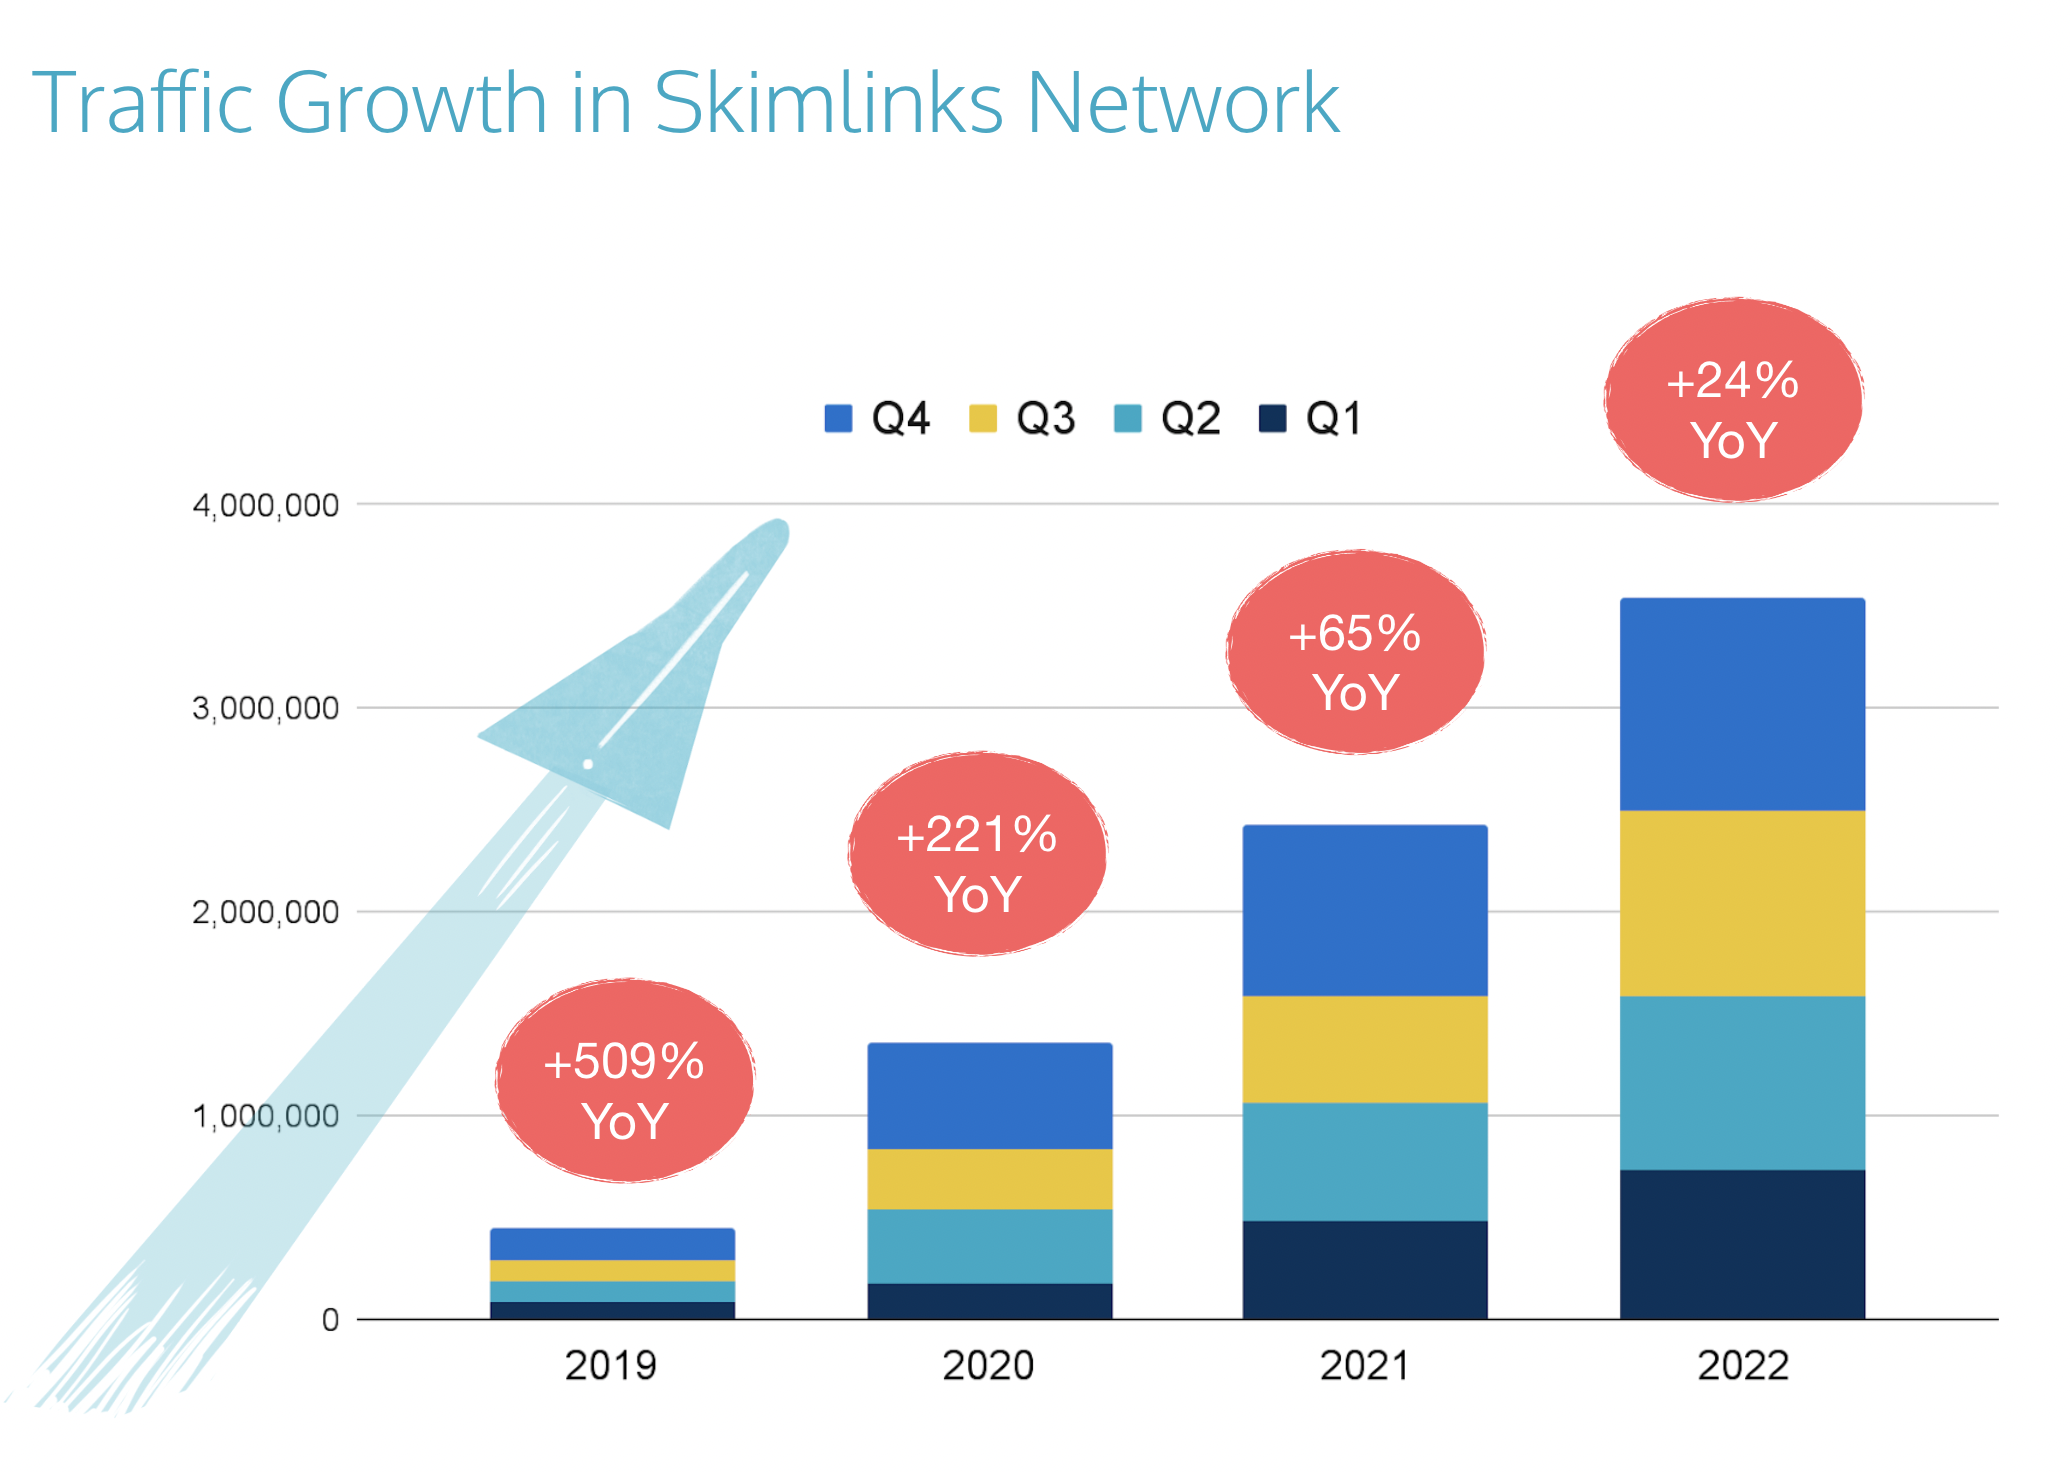 Traffic Growth in Skimlinks Network in Taiwan